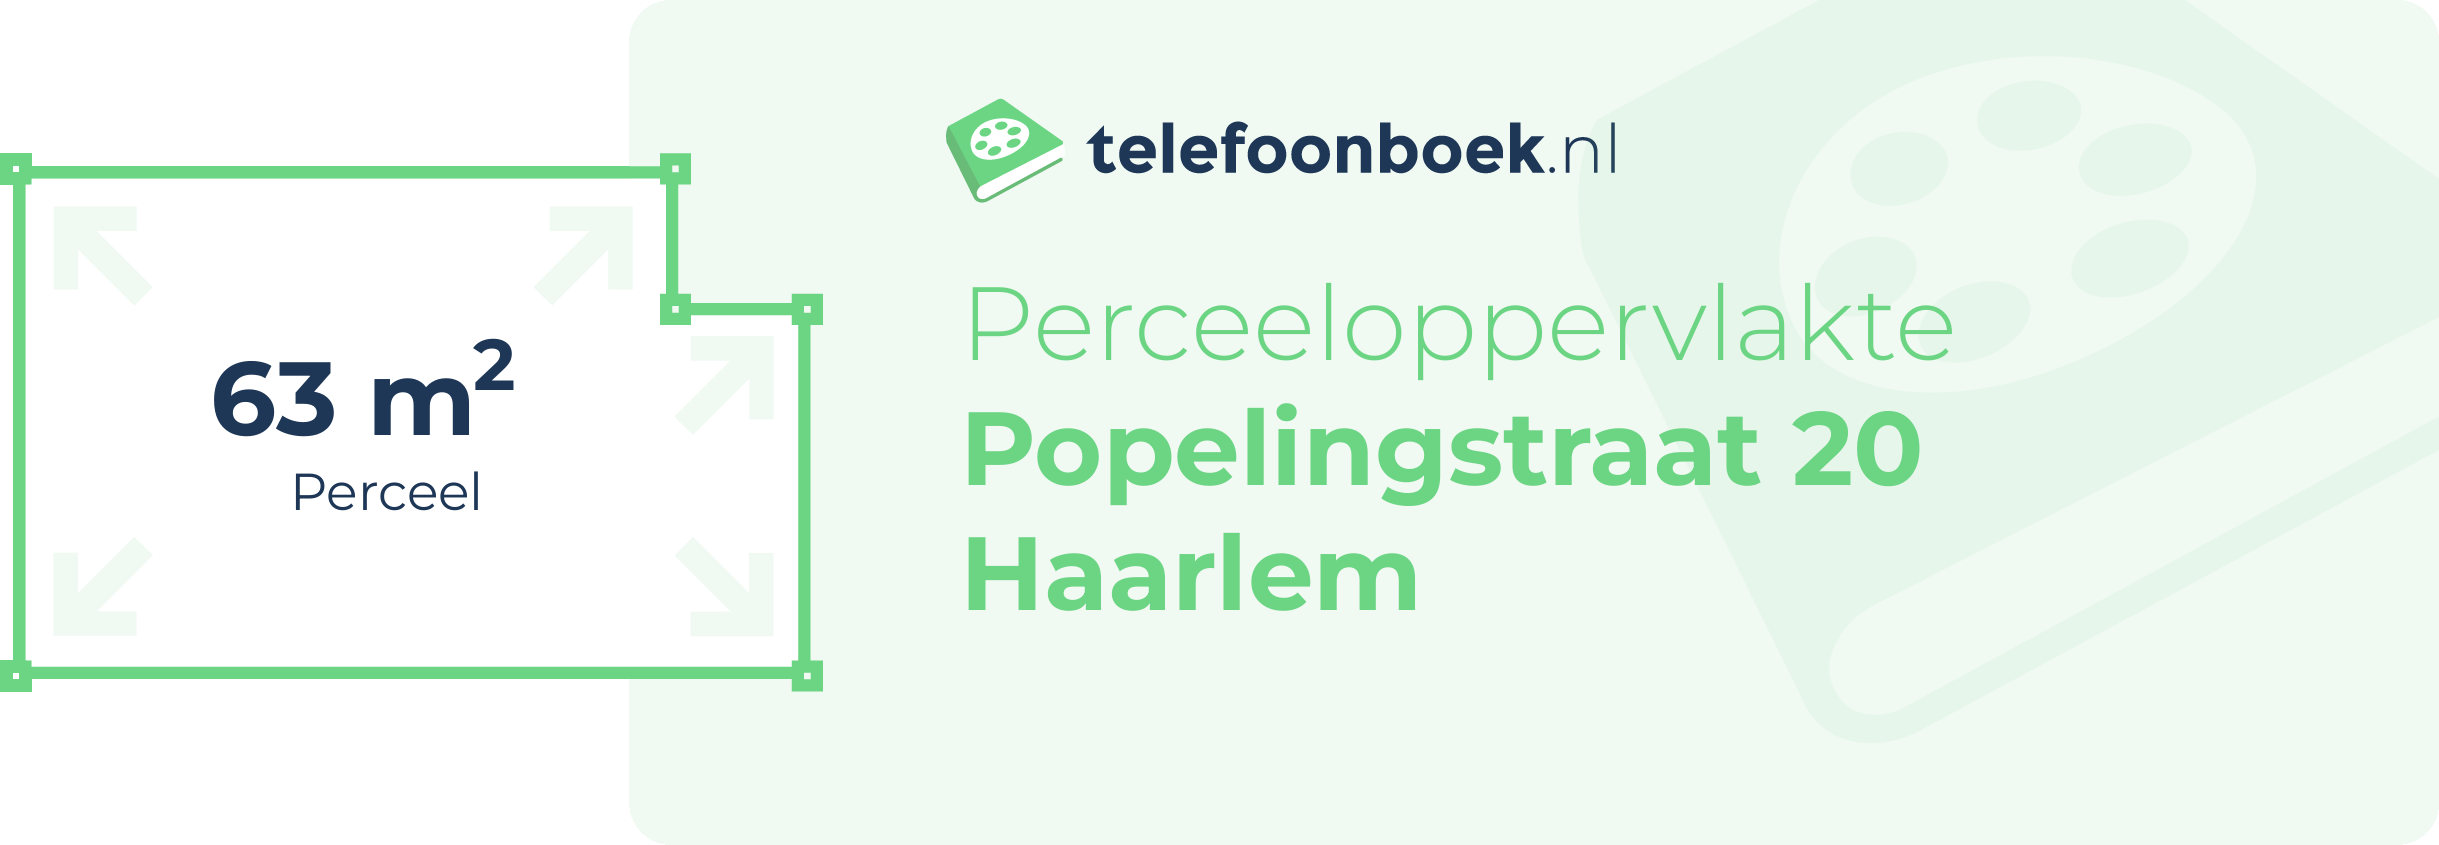 Perceeloppervlakte Popelingstraat 20 Haarlem